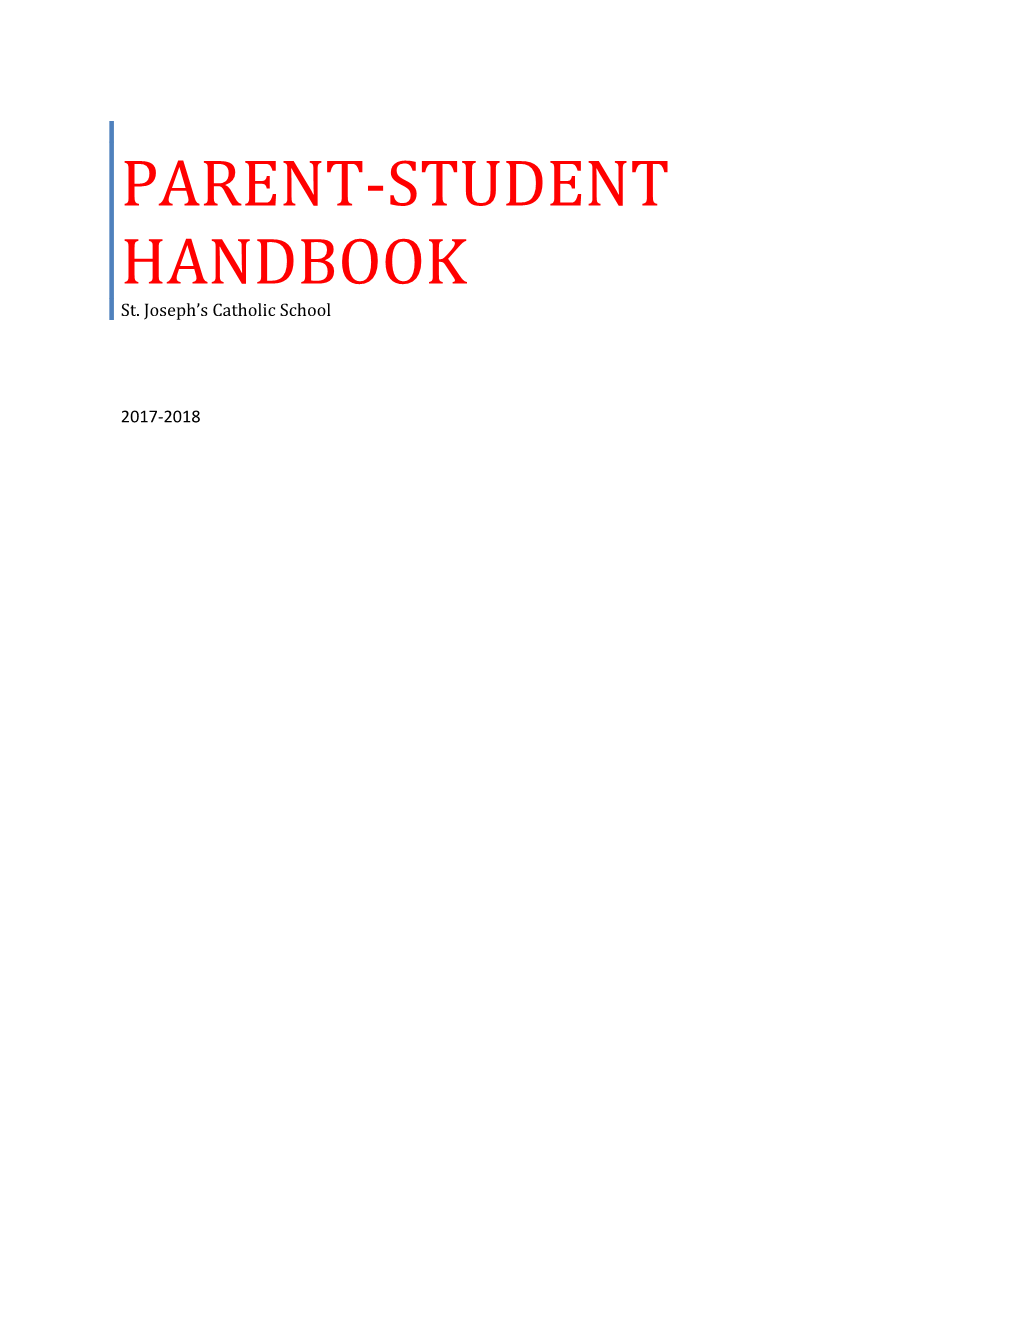 Parent-Student Handbook s5